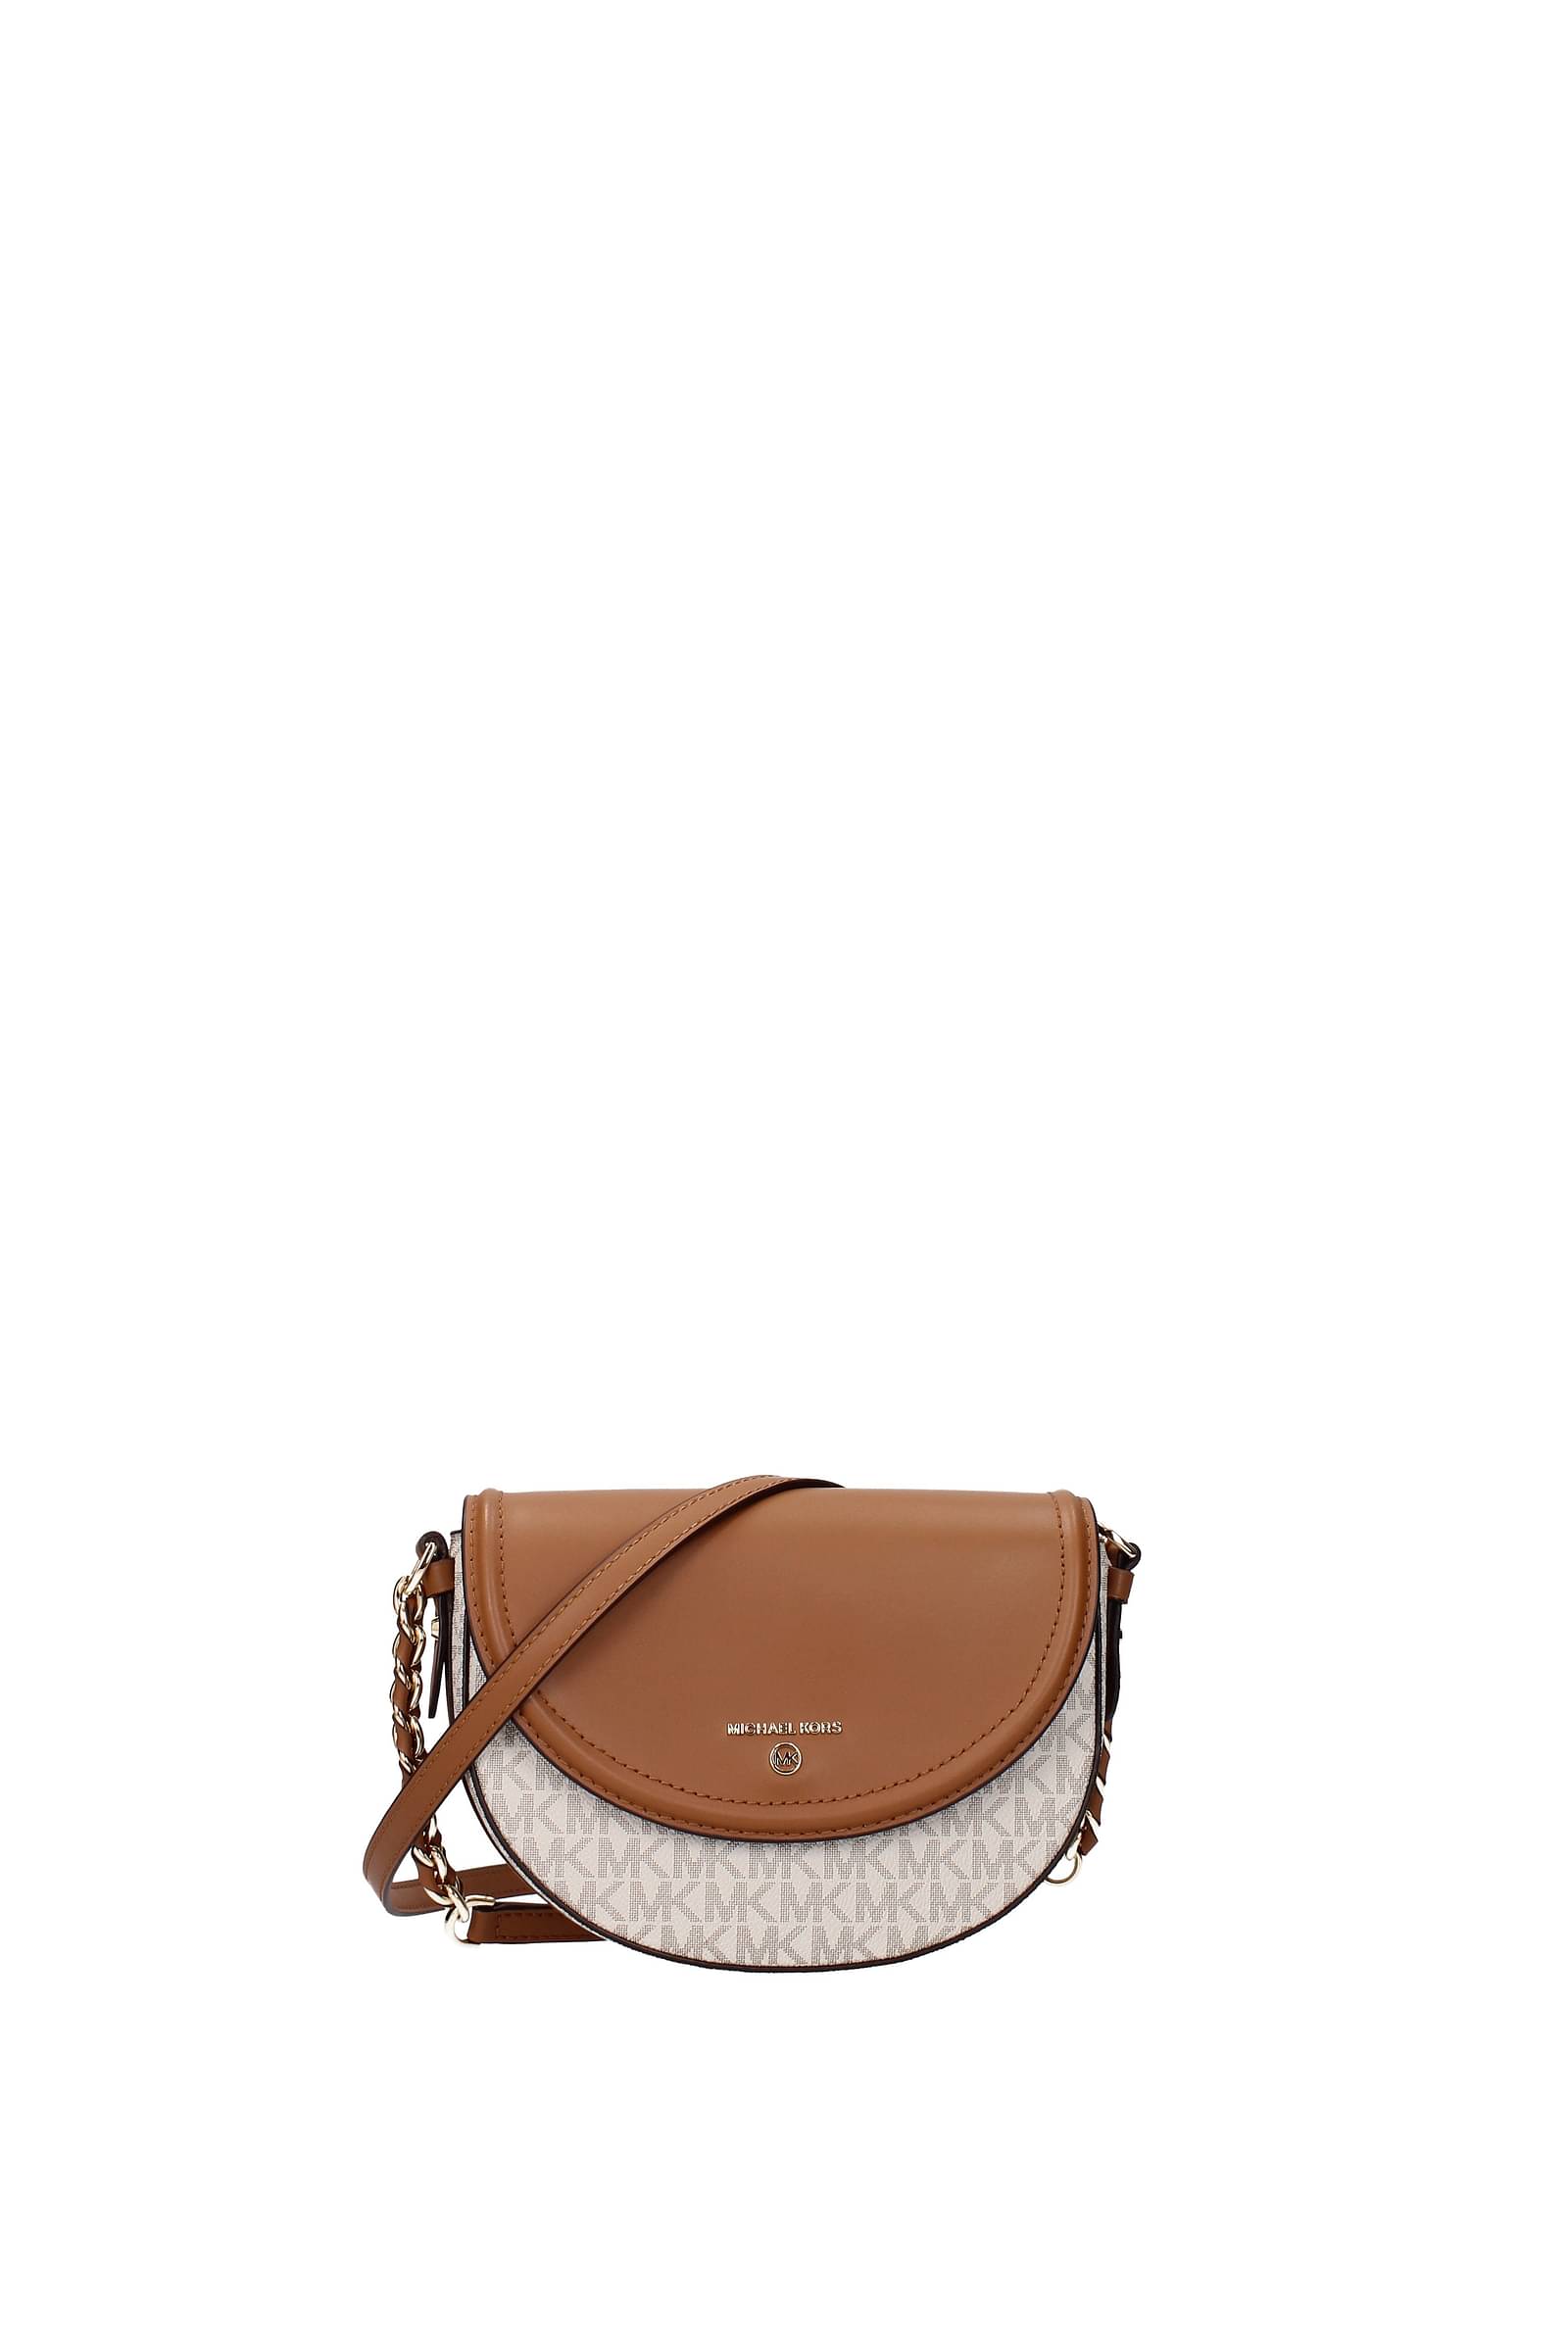 Michael Kors Trisha Medium Leather Triple Pocket Shoulder Bag beige   Amazonde Fashion